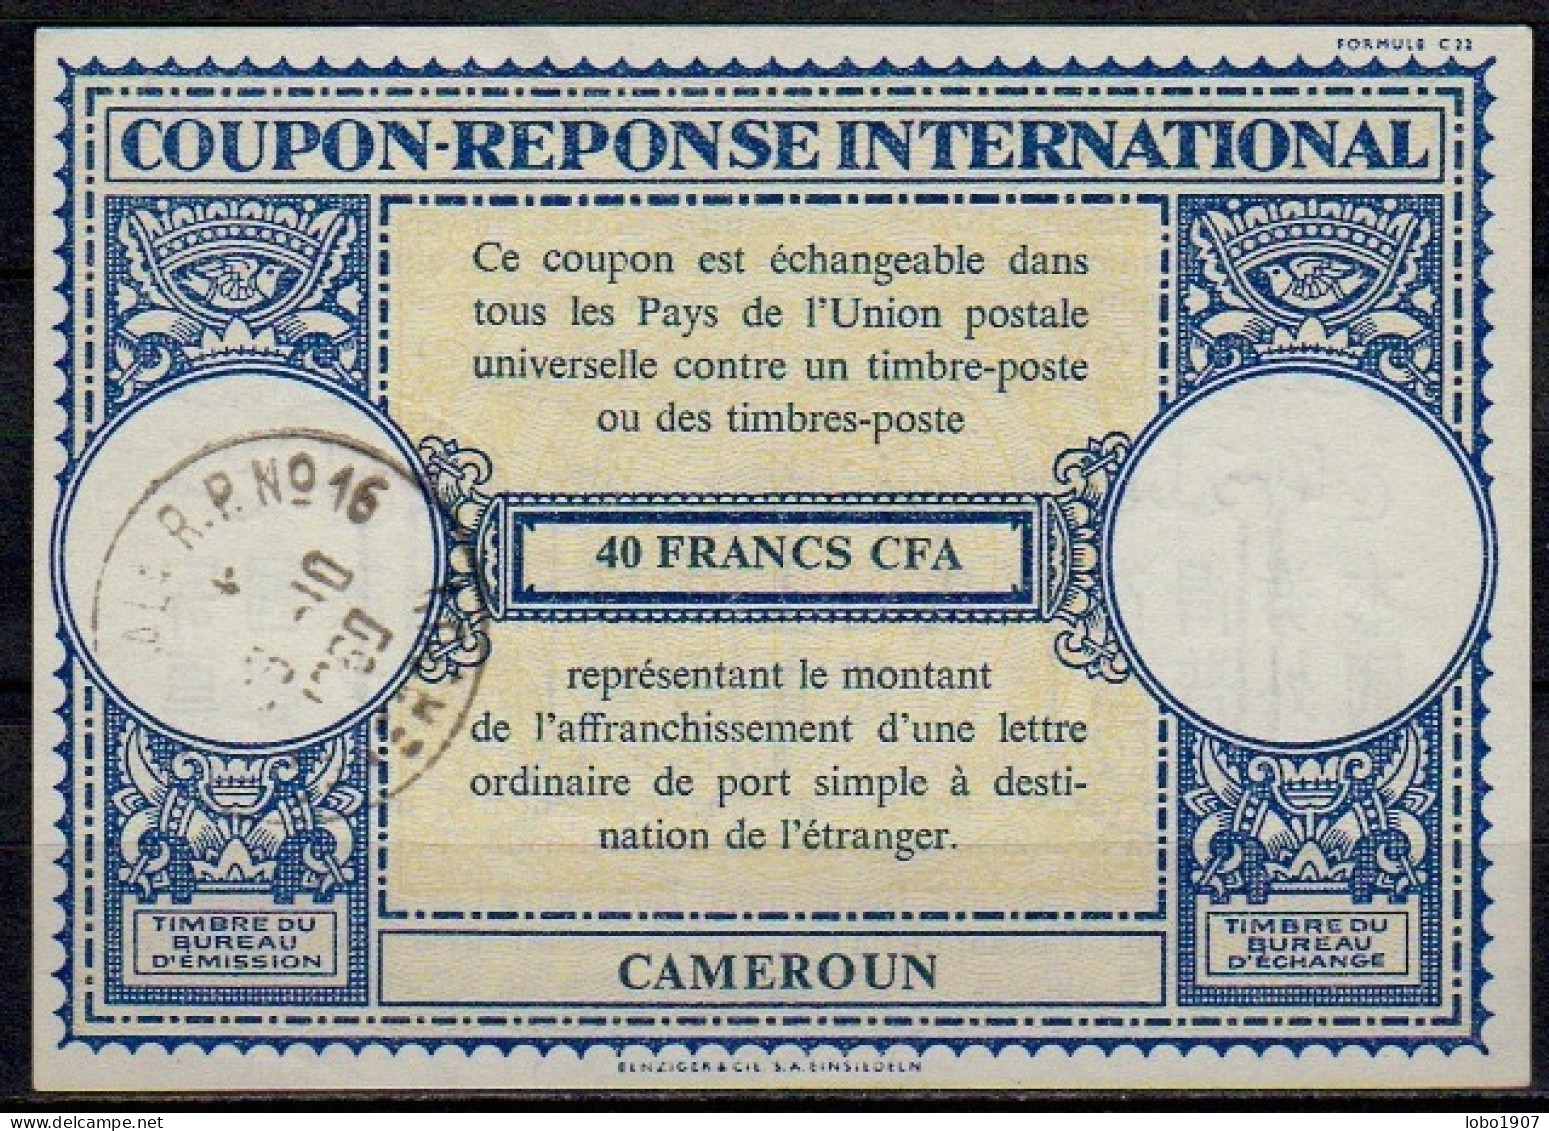 CAMEROUN, CAMEROON  Lo16n  40 FRANCS Int. Reply Coupon Reponse Antwortschein IRC IAS Cupon Respuesta  DOUALA 29.10.60 - Cameroun (1960-...)